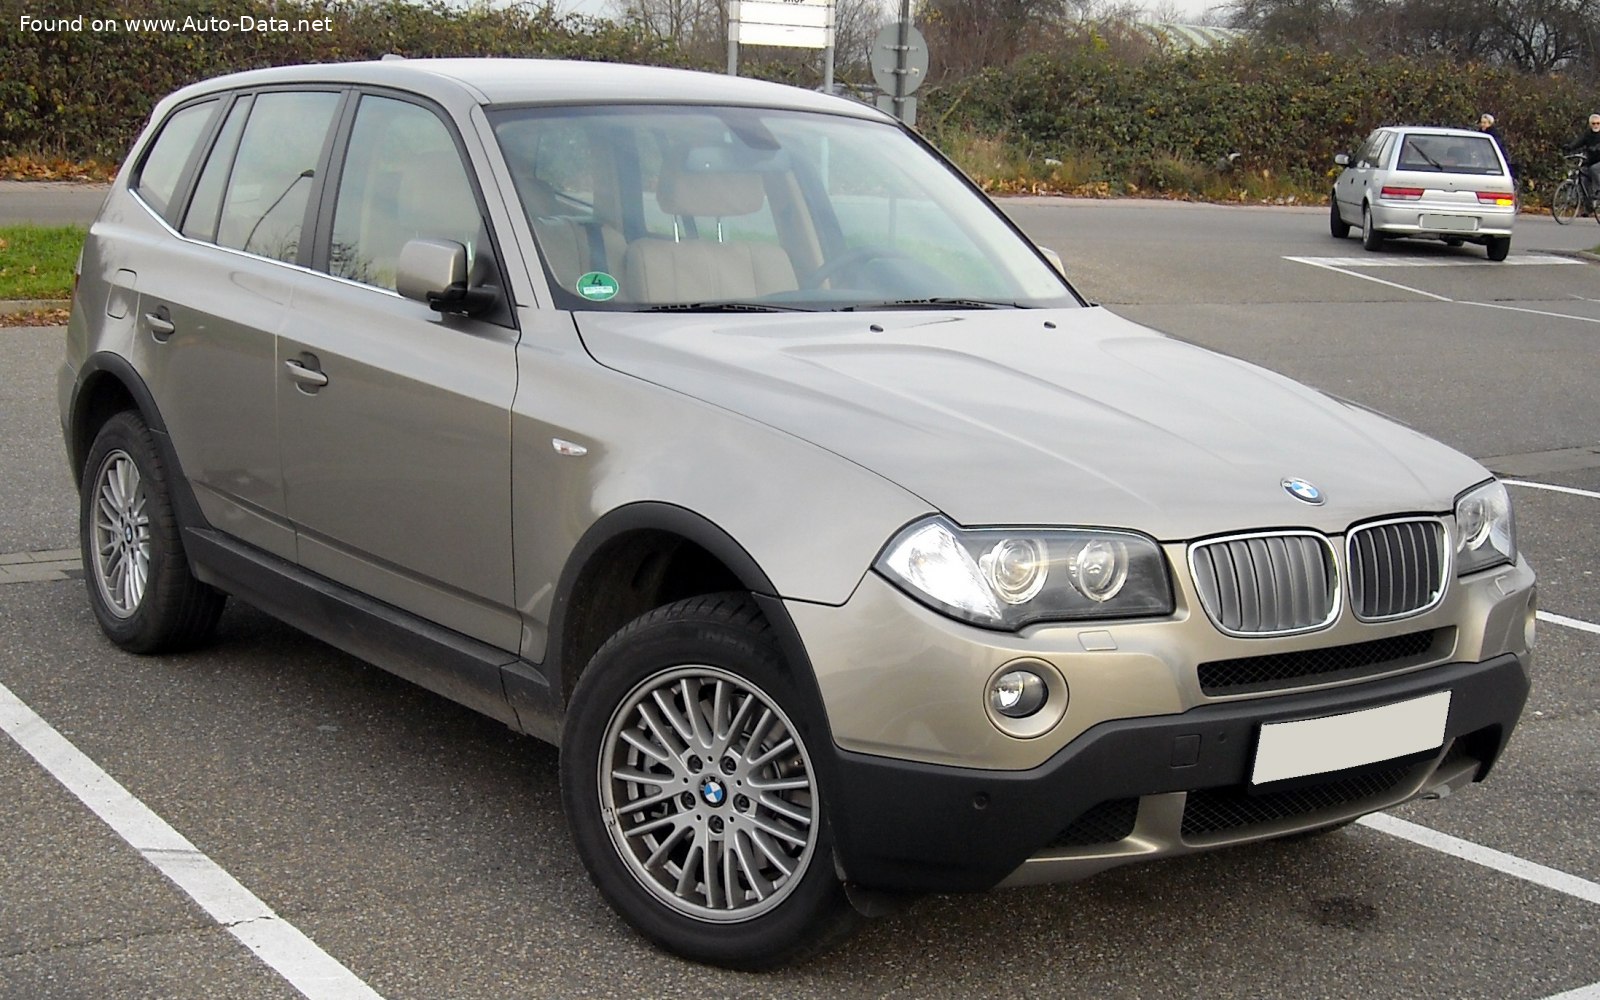 BMW X3 2003-2006 Dimensions Rear View